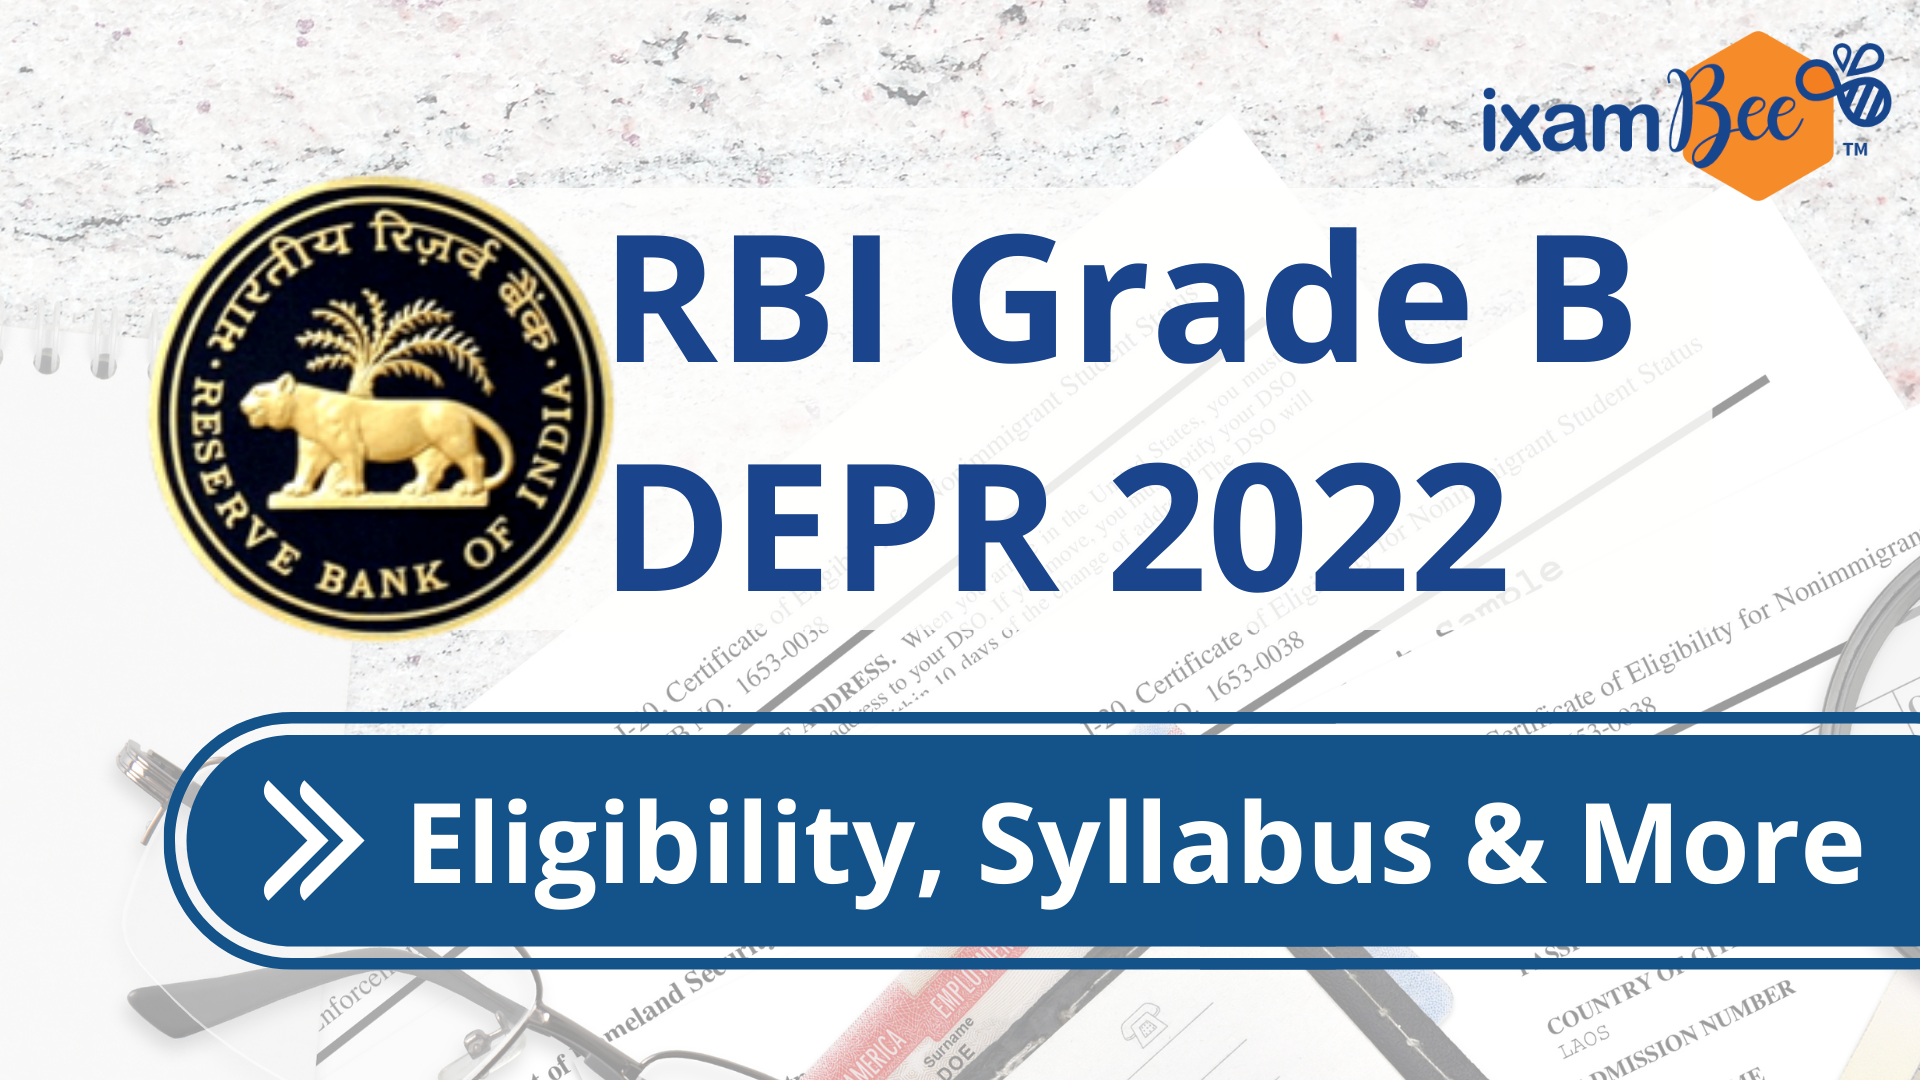 RBI Grade B DEPR 2022: Eligibility, Syllabus and More